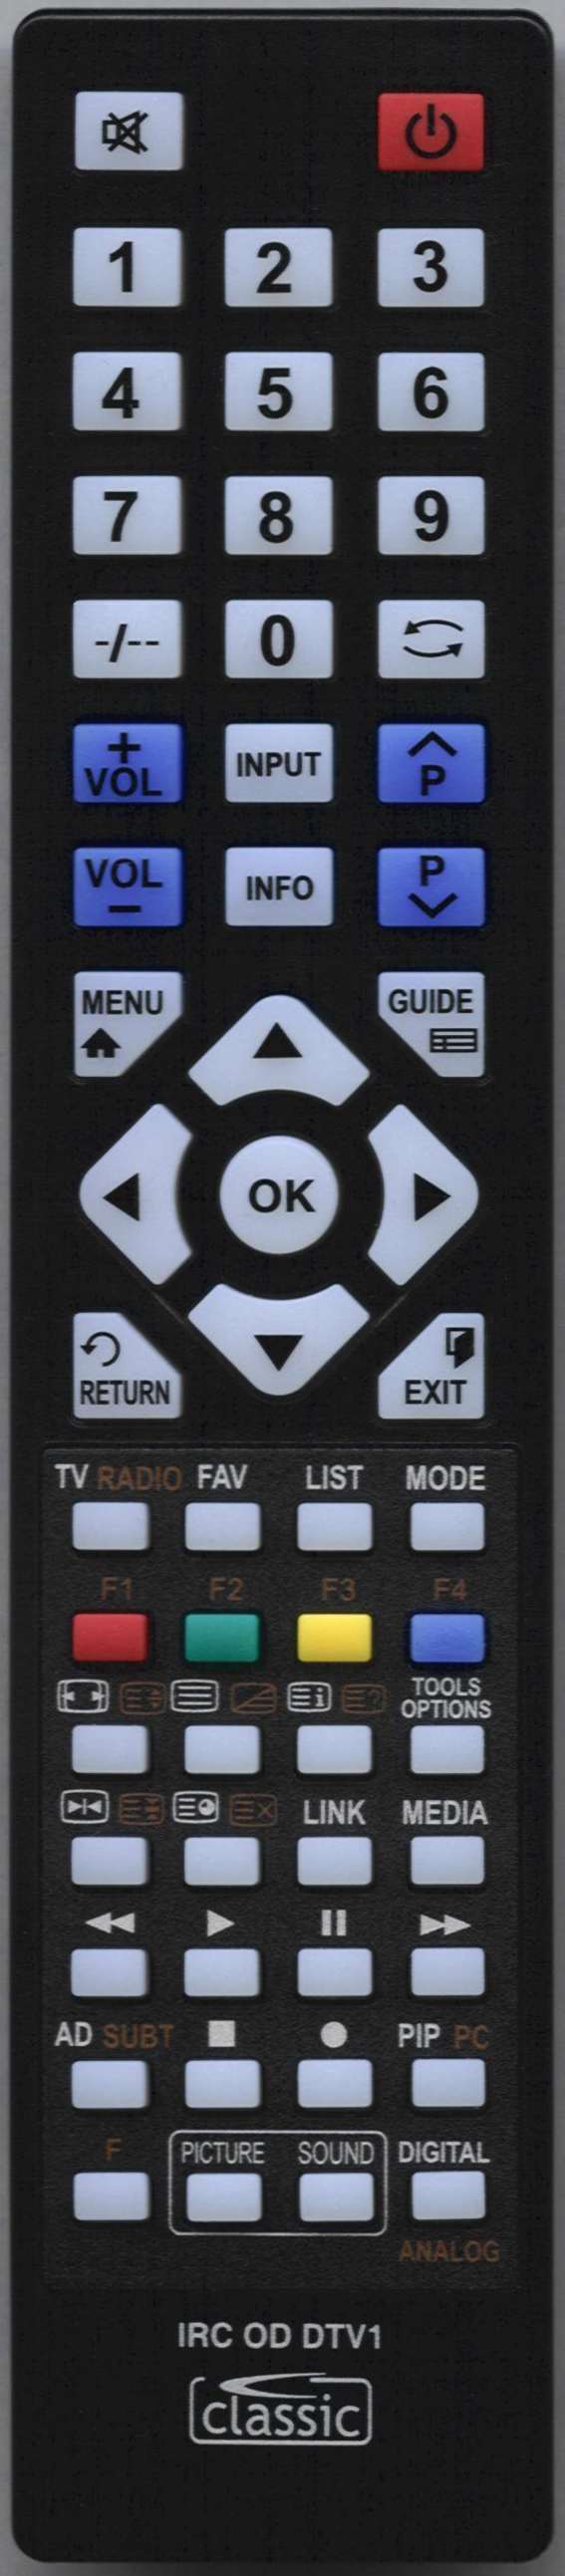 UMC E19/13B-GB-TC-UK Remote Control